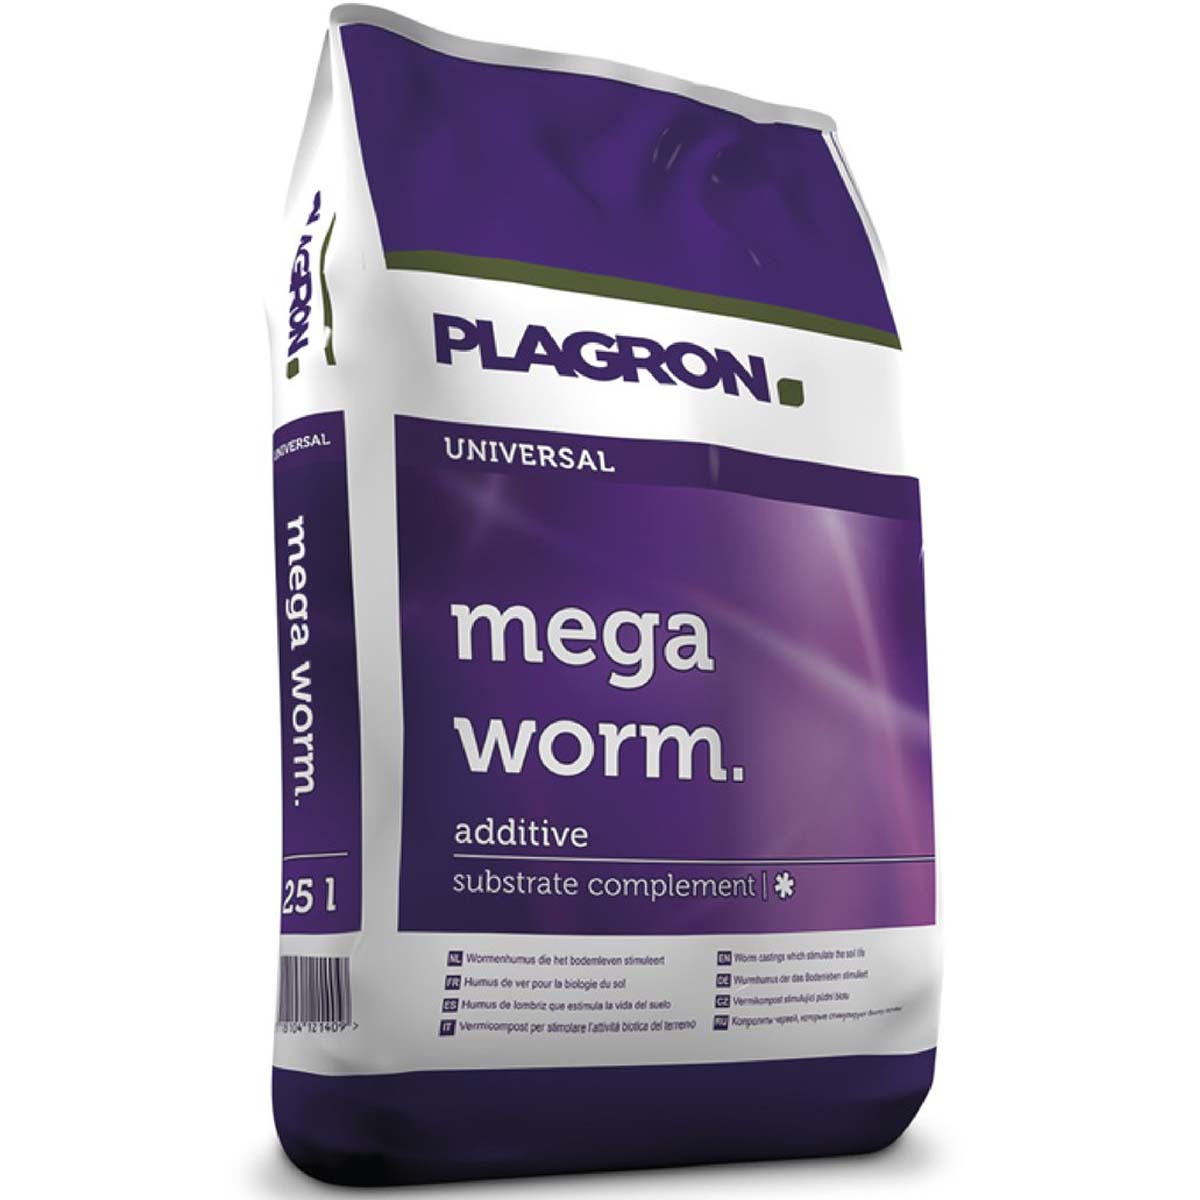 Plagron Nutrients - Mega Worm